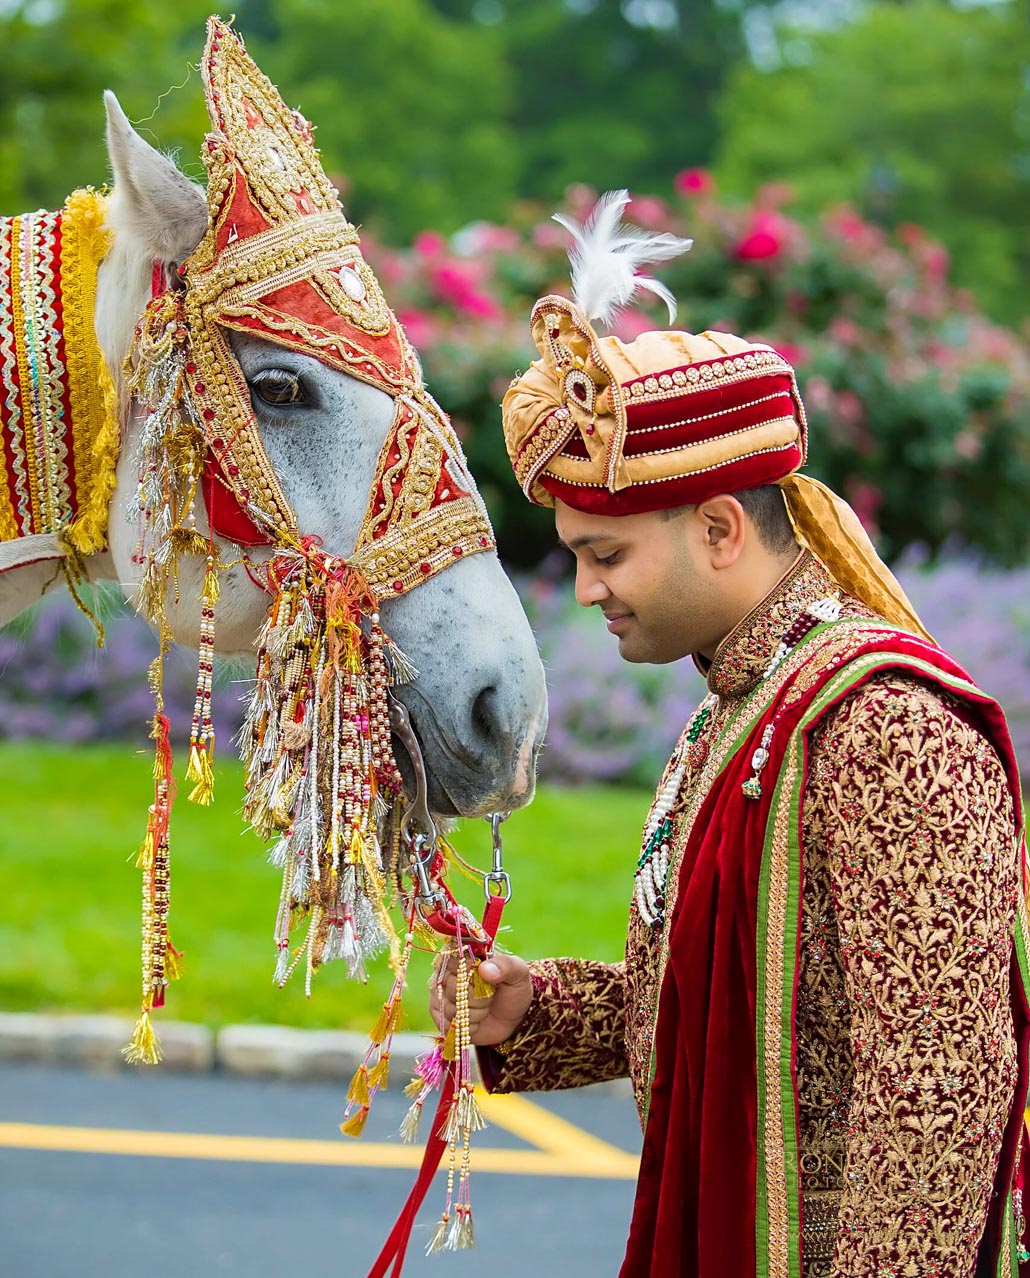  Sheraton Parsippany Hindu Wedding